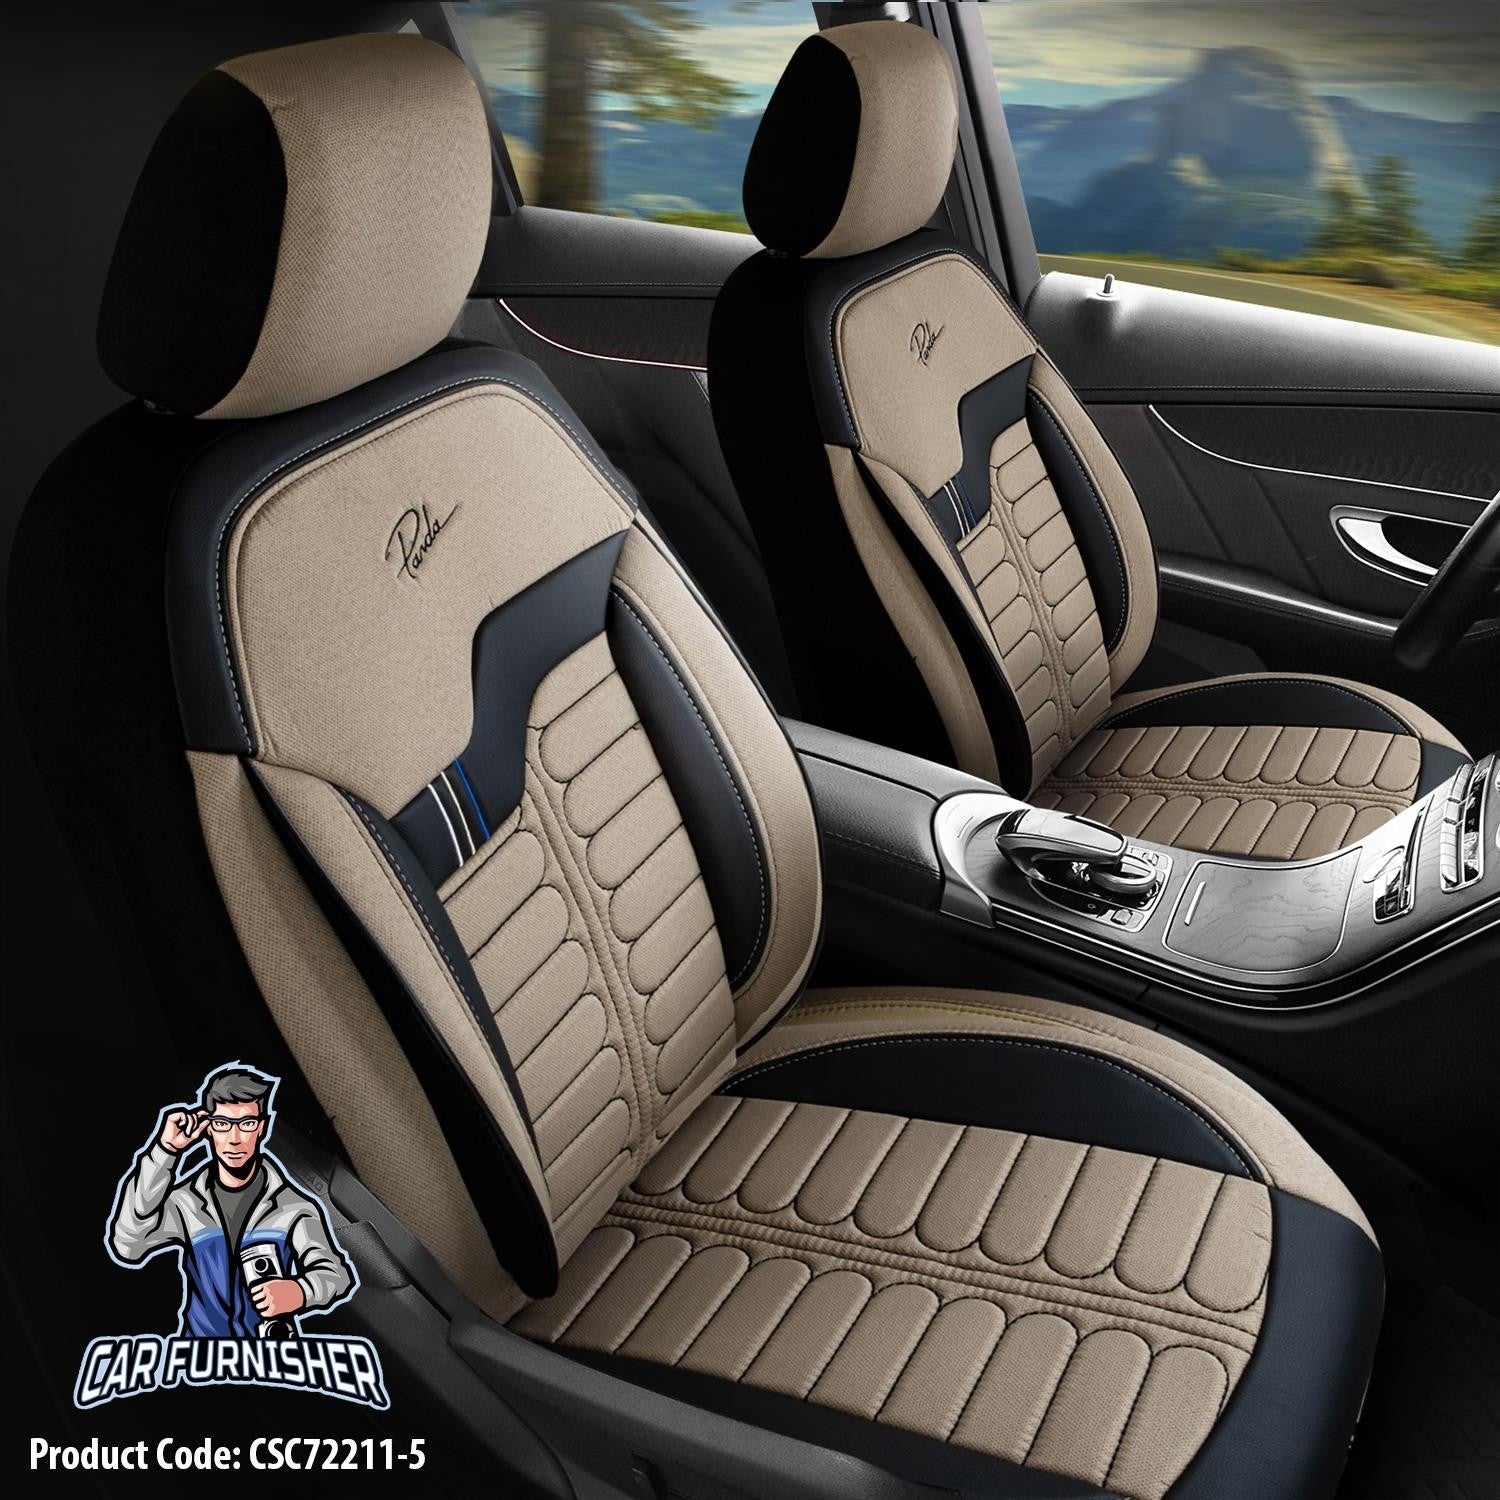 Mercedes 190 Seat Covers London Design Dark Beige 5 Seats + Headrests (Full Set) Leather & Jacquard Fabric